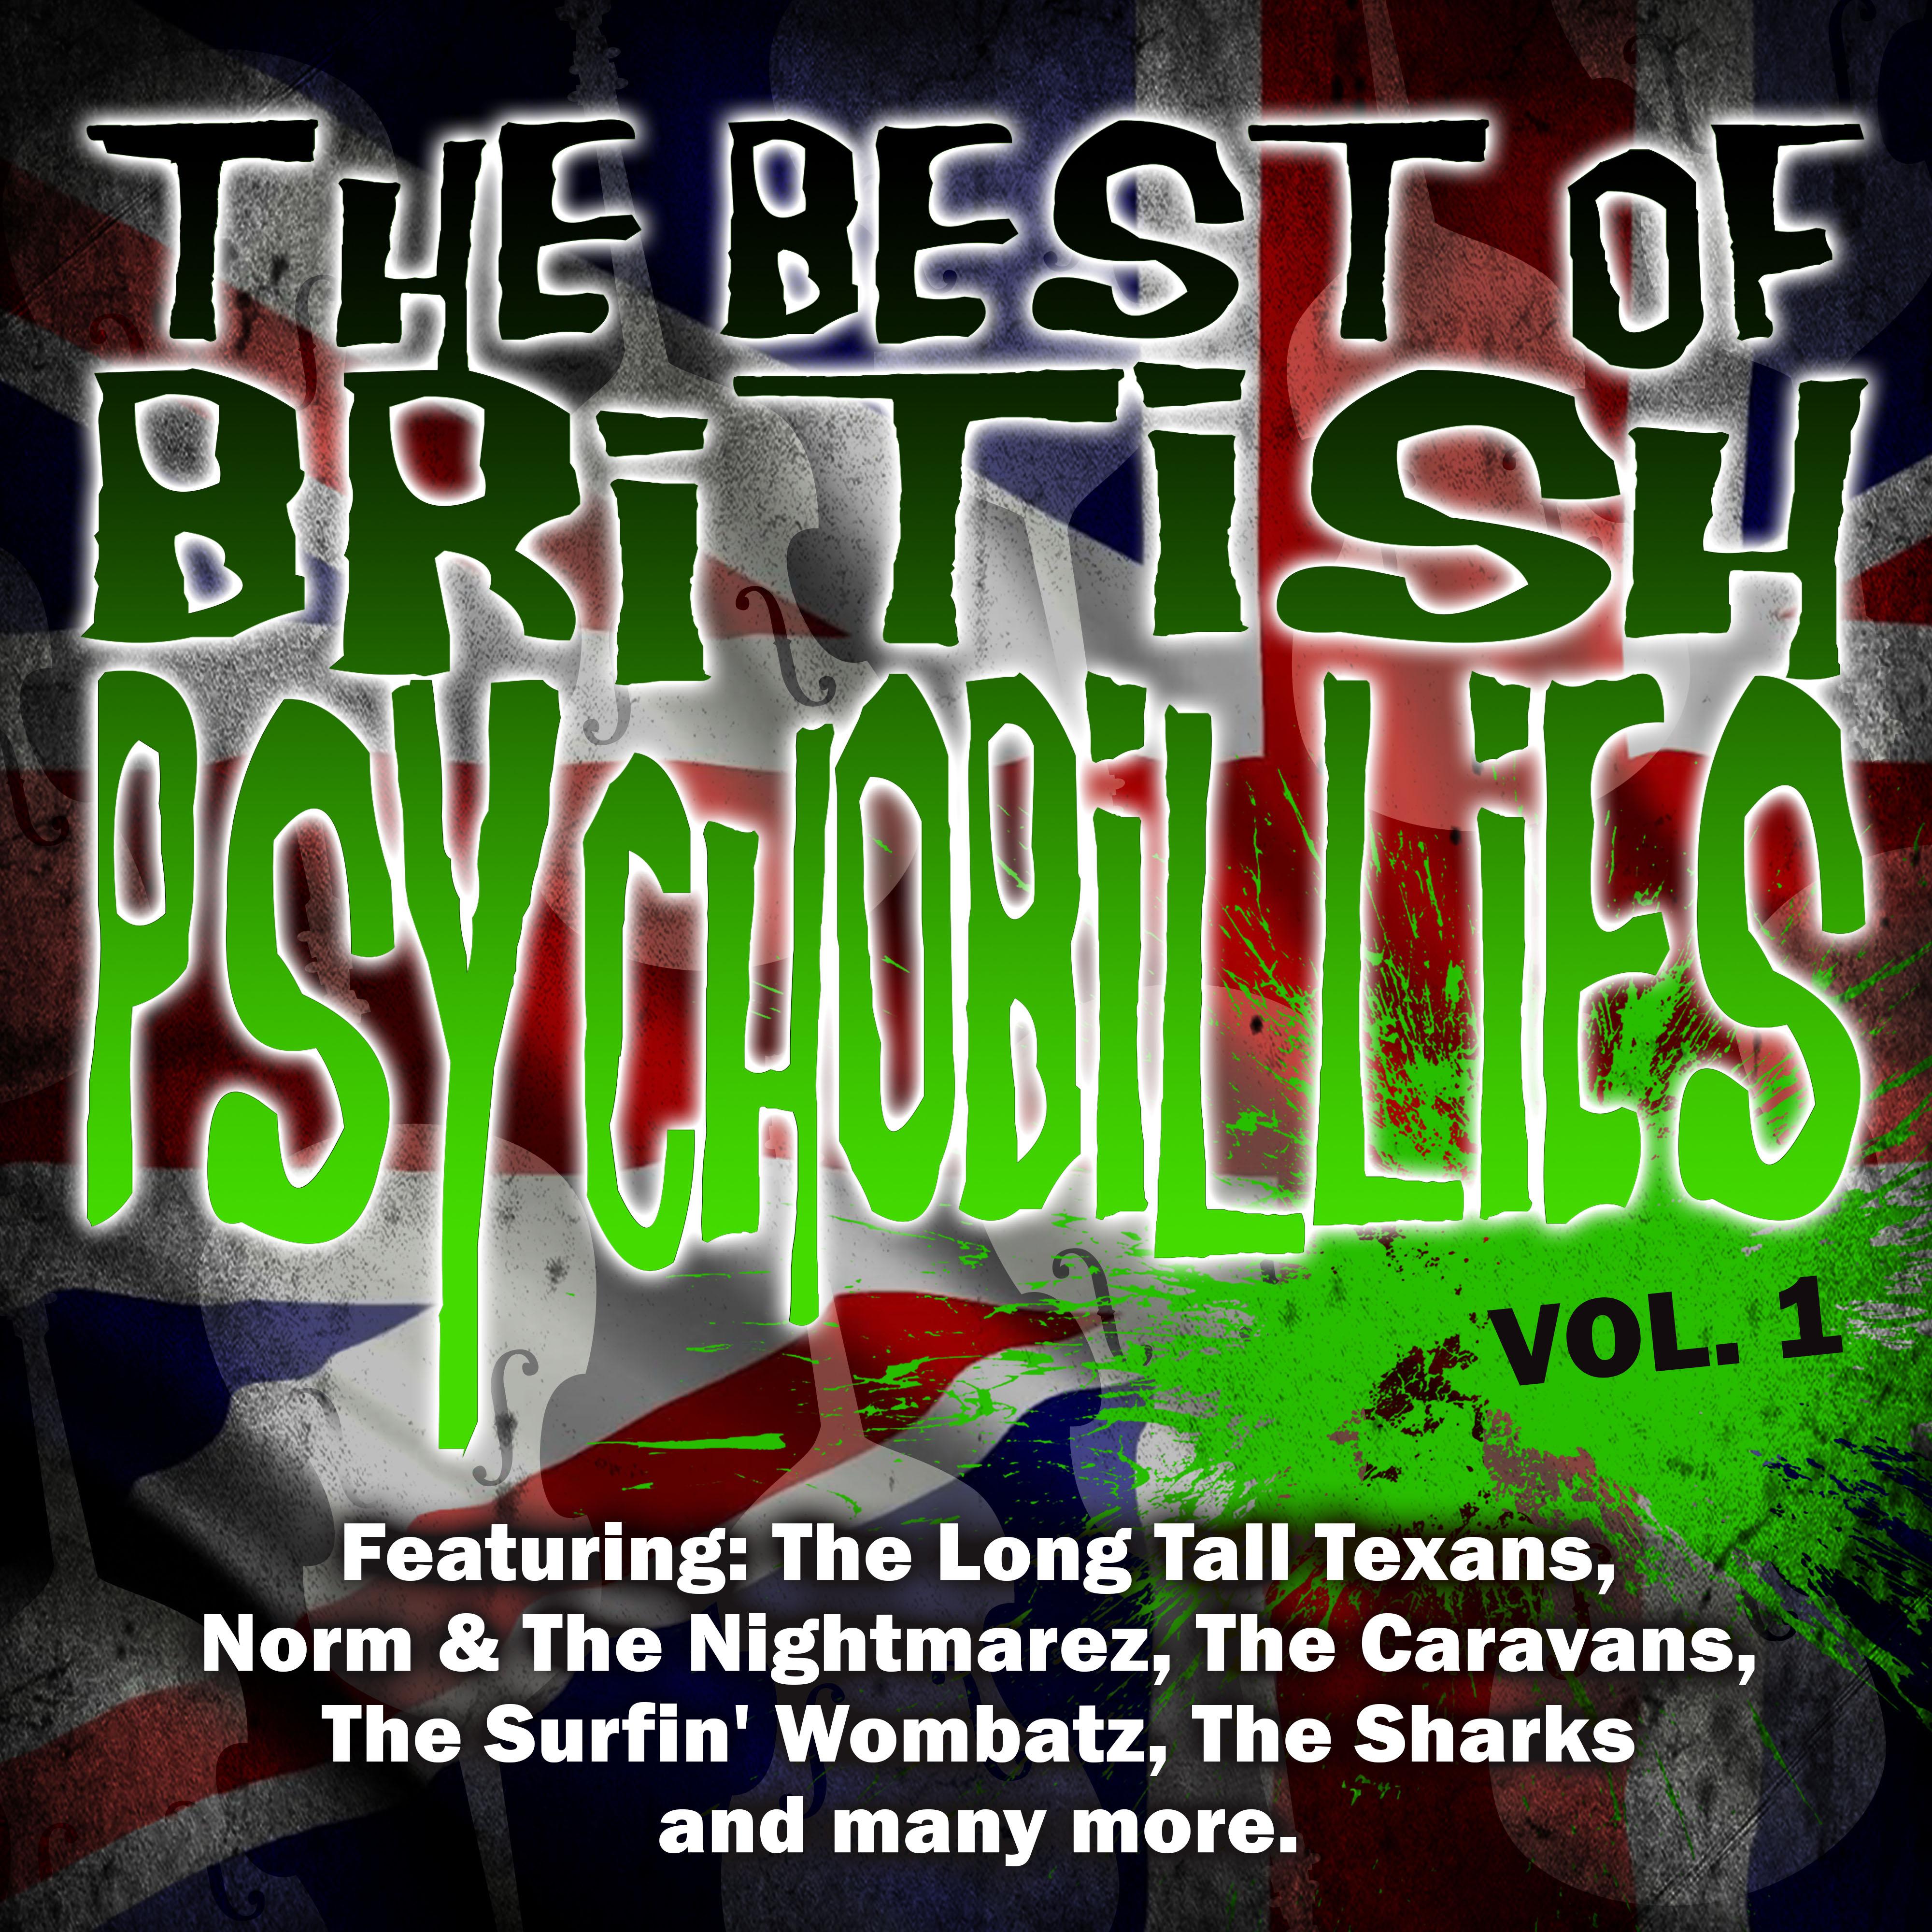 The Best Of British Psychobilly (Vol. 1)